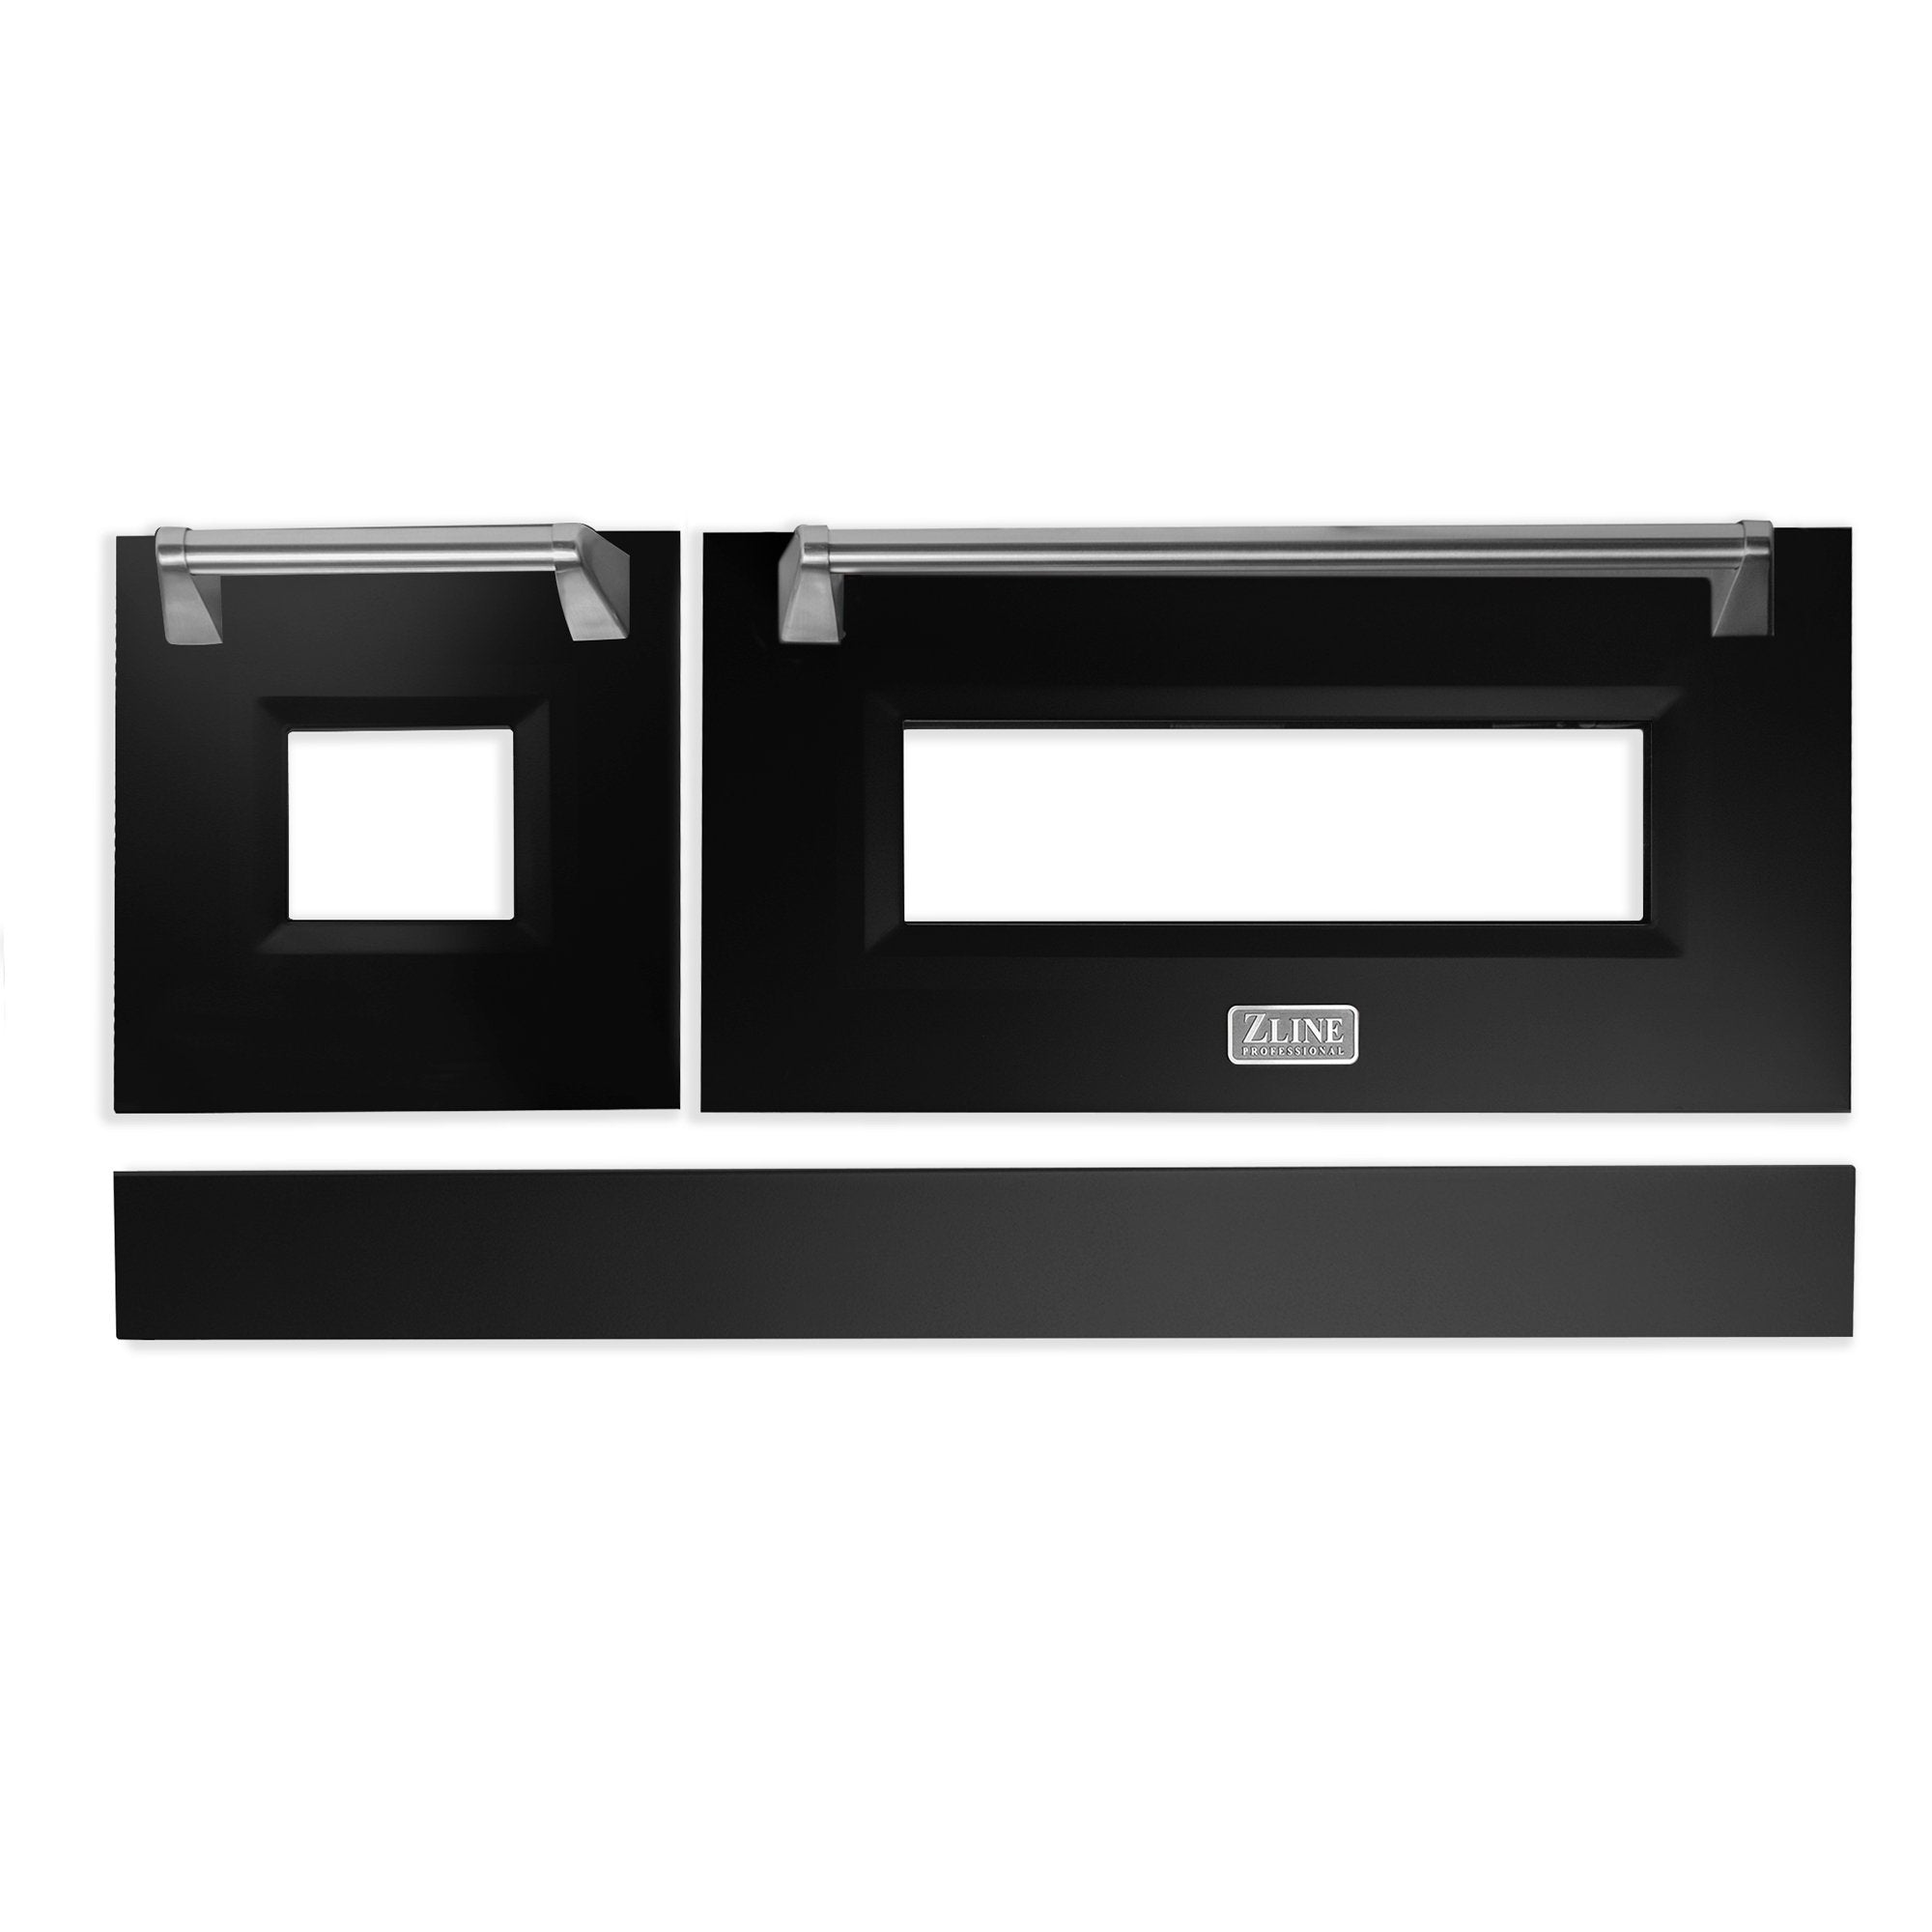 ZLINE Kitchen and Bath, ZLINE 48" Range Door in DuraSnow® Stainless Steel with Color Options, RA-DR-BLM-48,